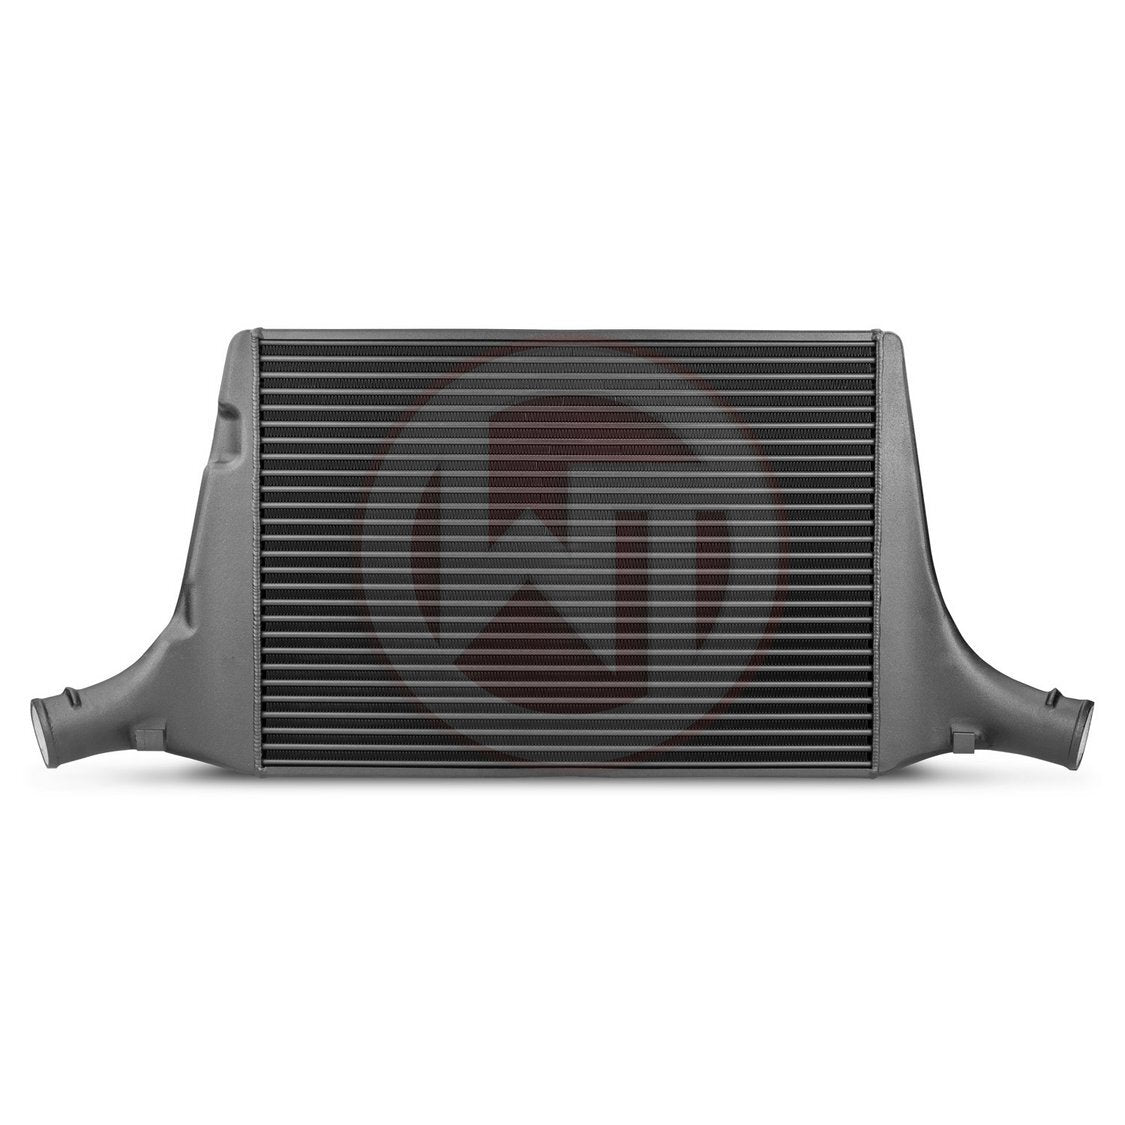 WAGNER TUNING -
Competition Ladeluftkühler Kit Audi A6 C7 3,0TDI / BiTDI